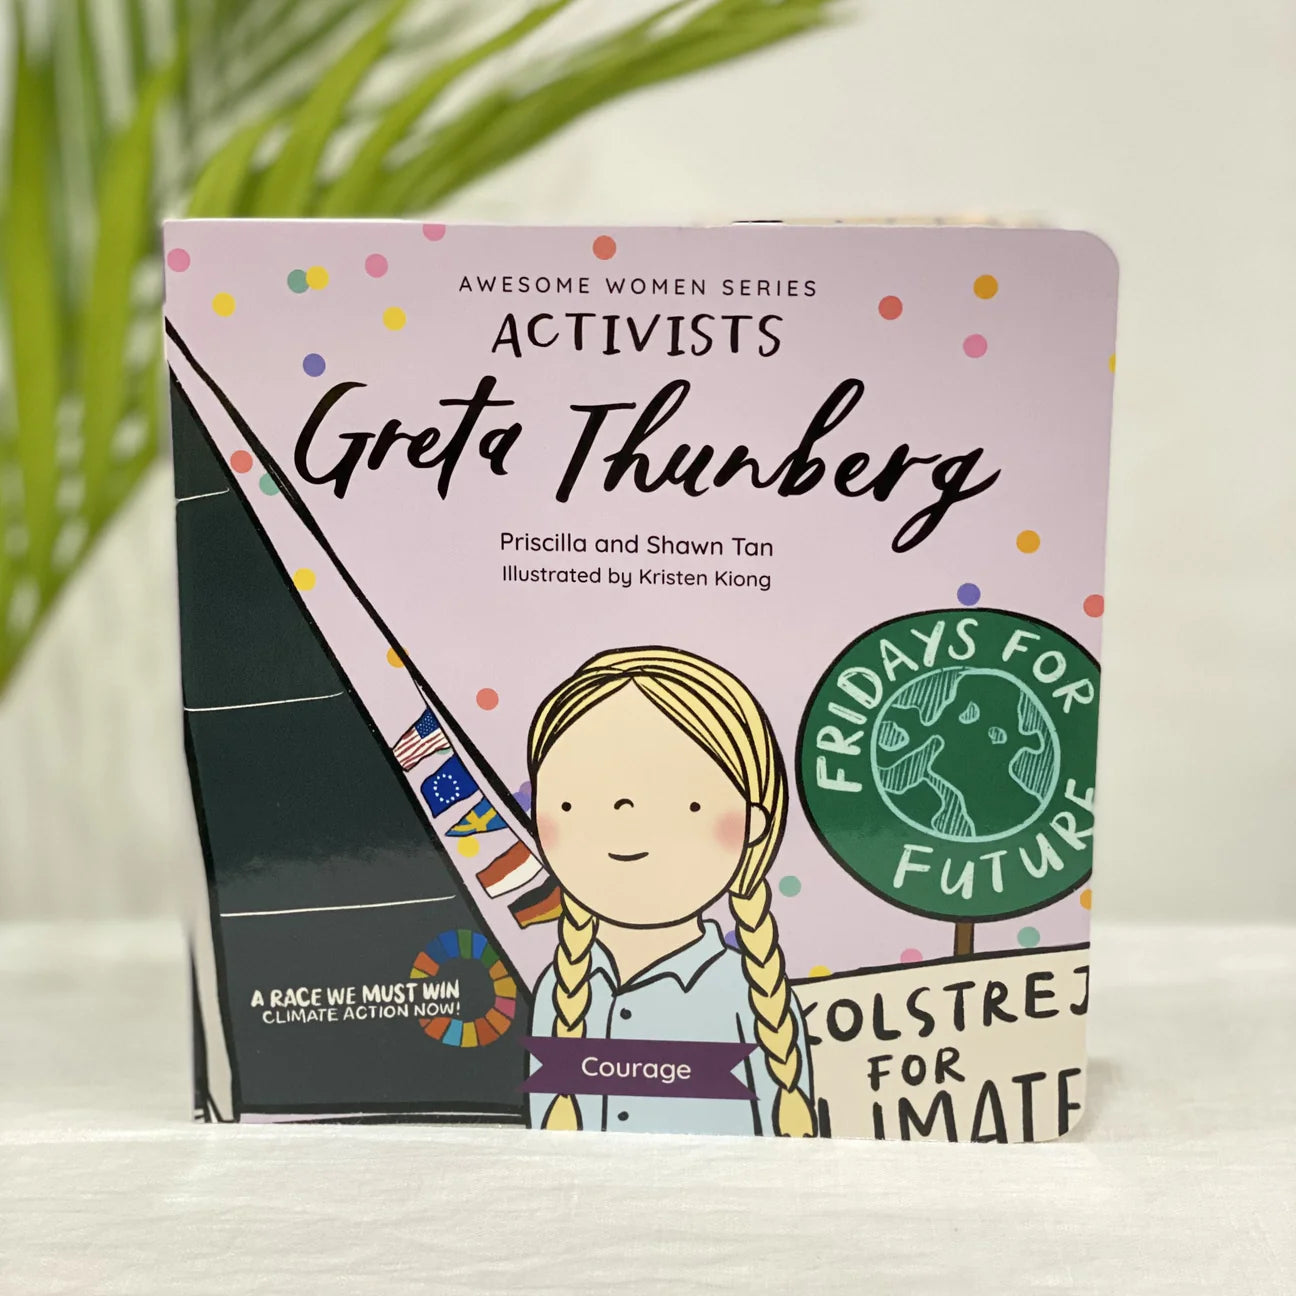 Awesome Women Series Activists | Greta Thunberg